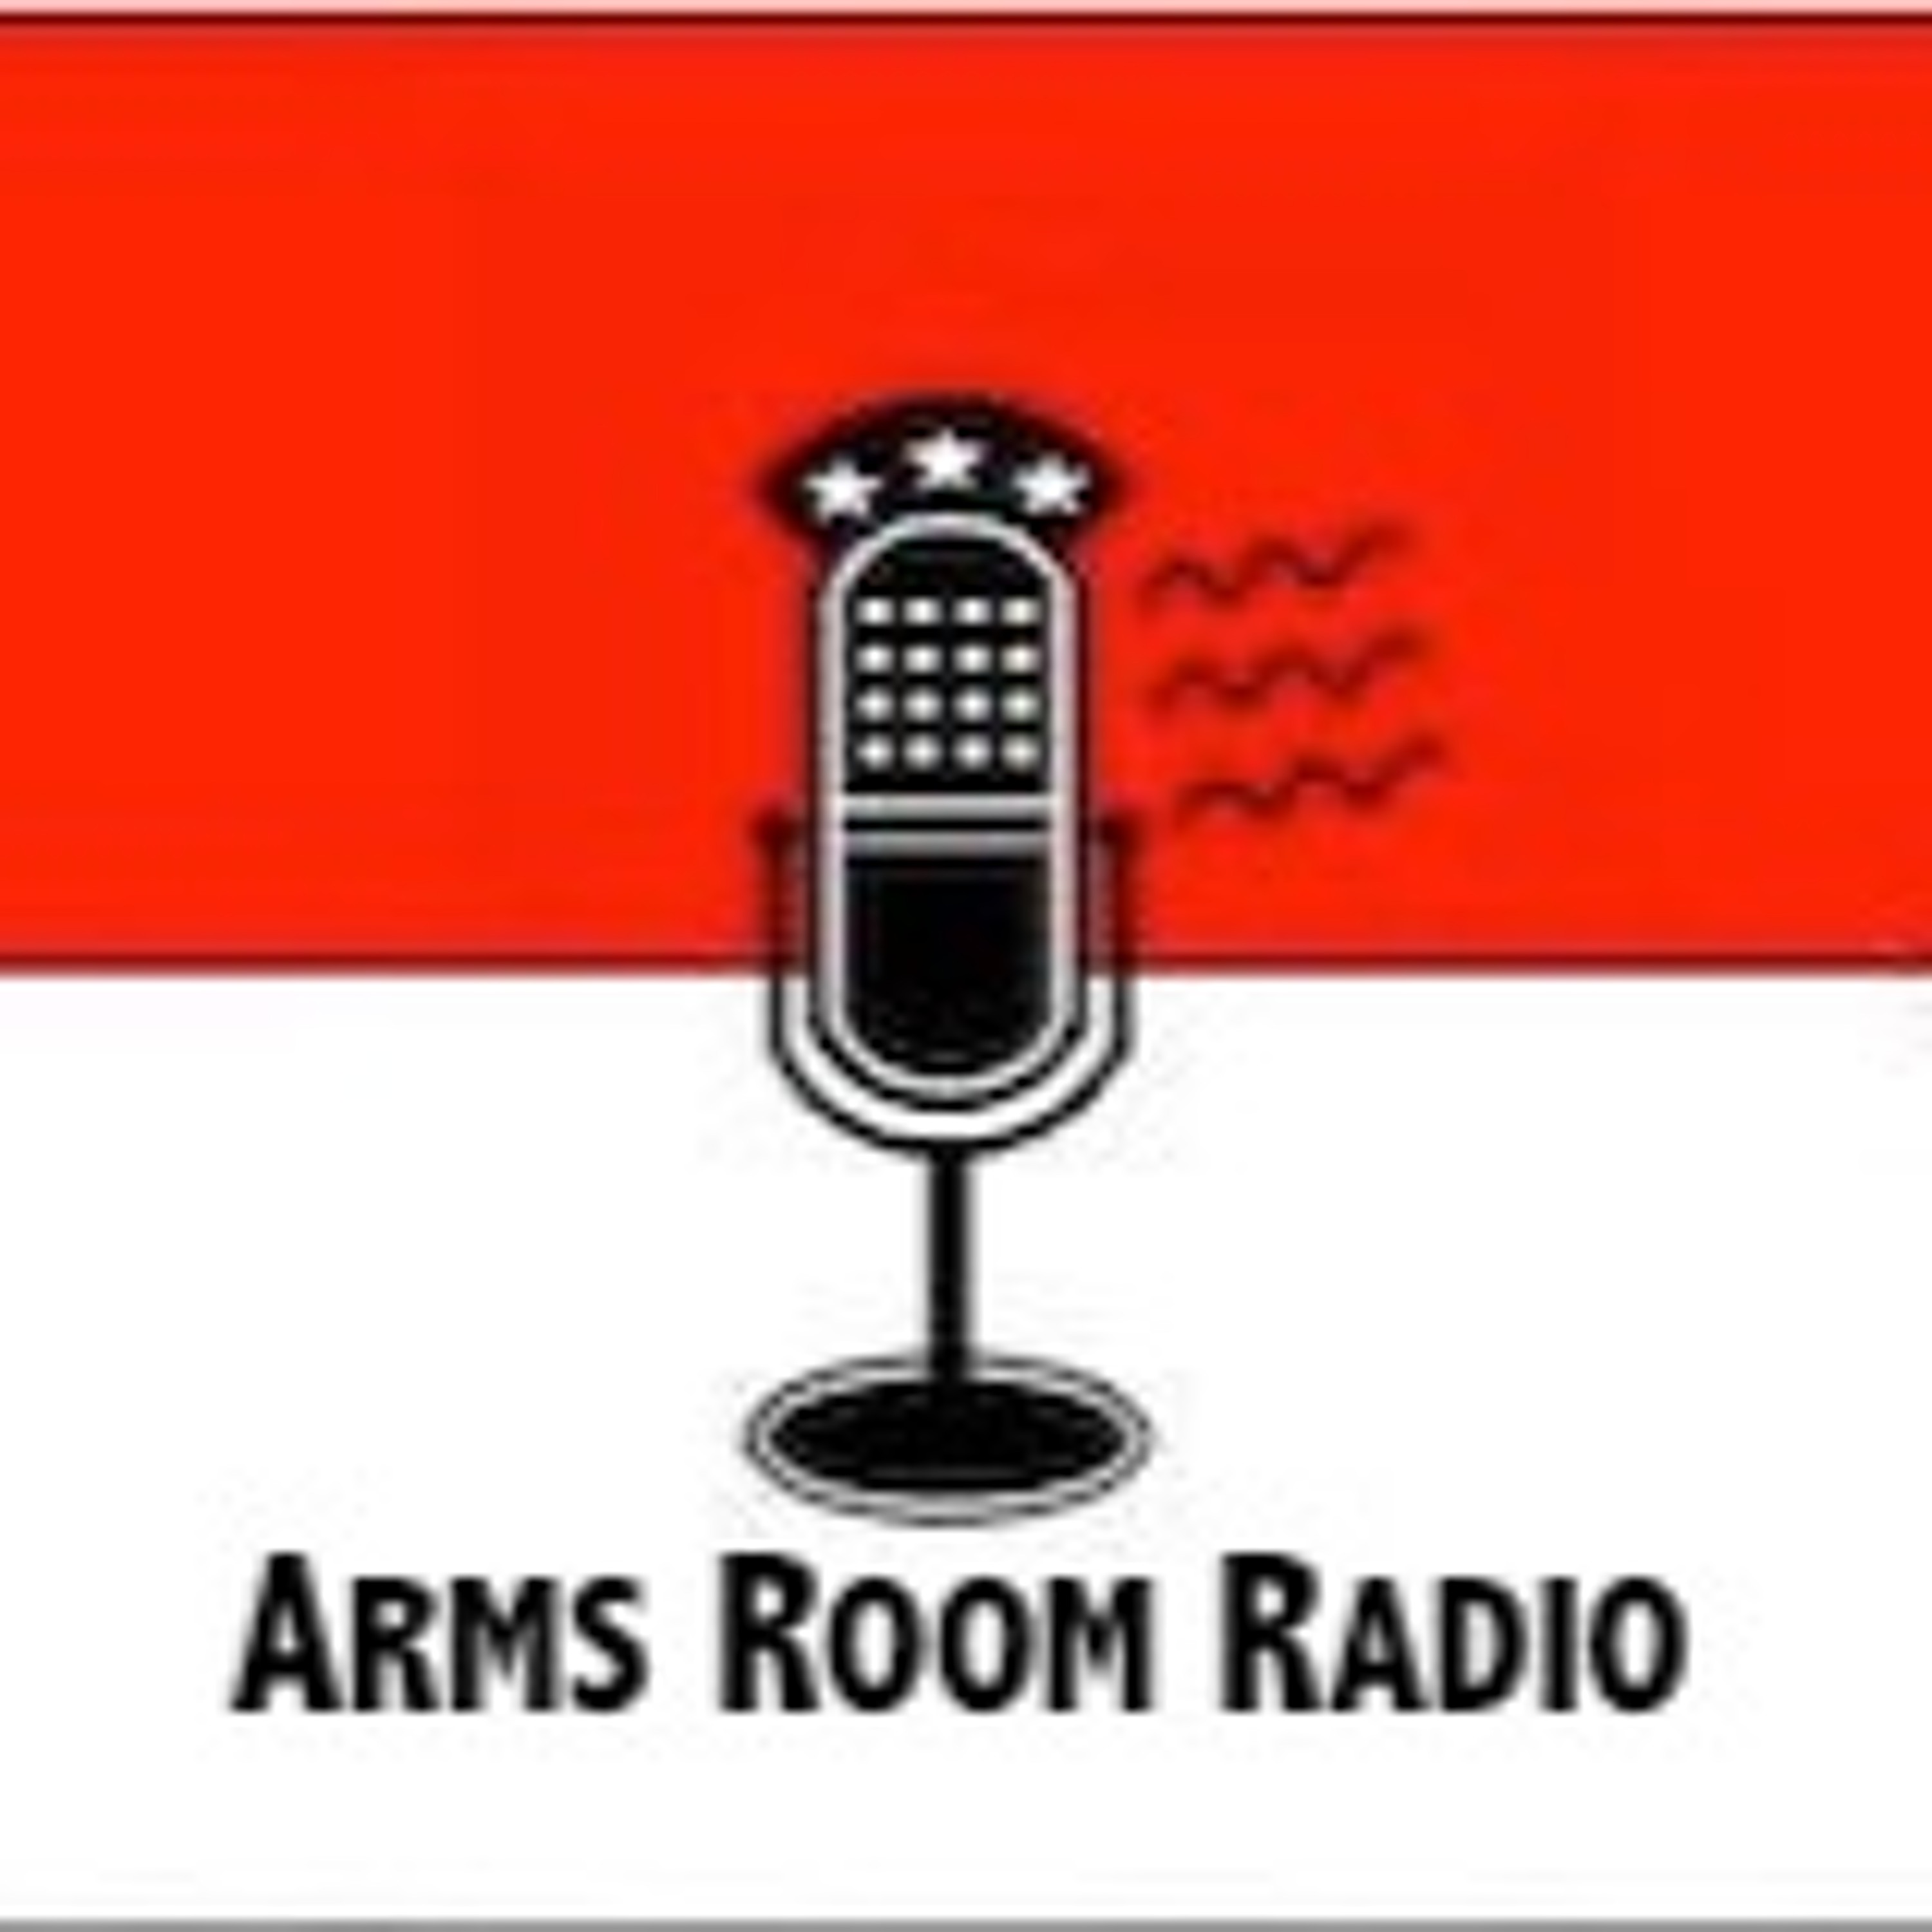 ArmsRoomRadio 12.26.20 Kevin in Studio, Mark Walters calls in